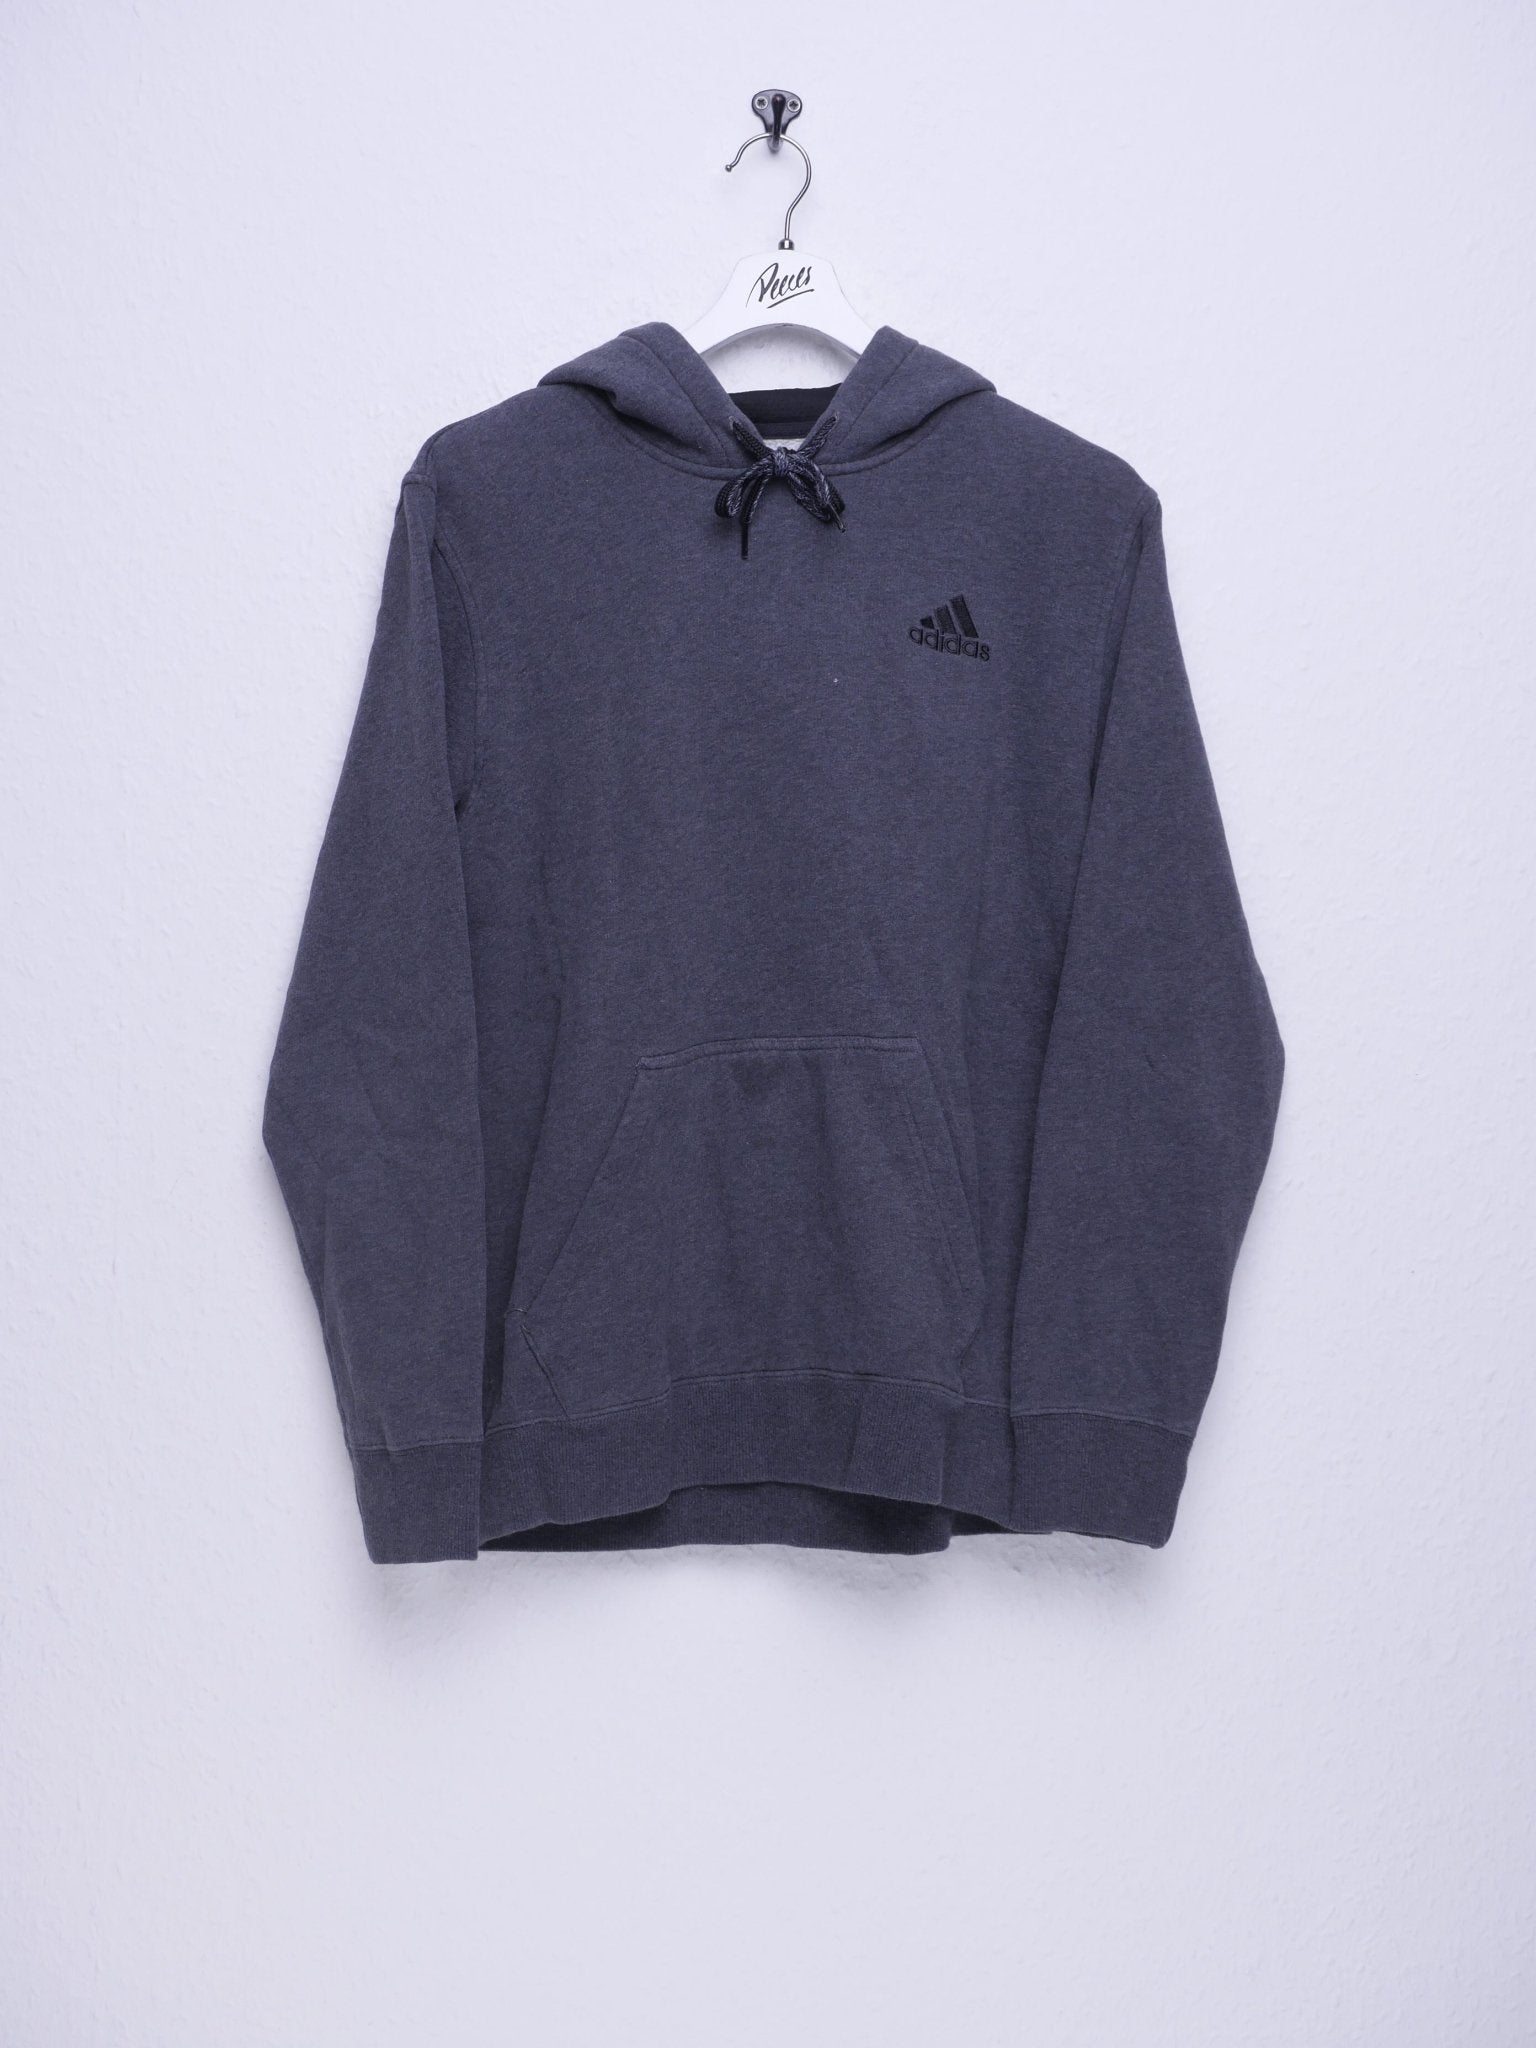 Adidas embroidered Logo grey basic Hoodie - Peeces